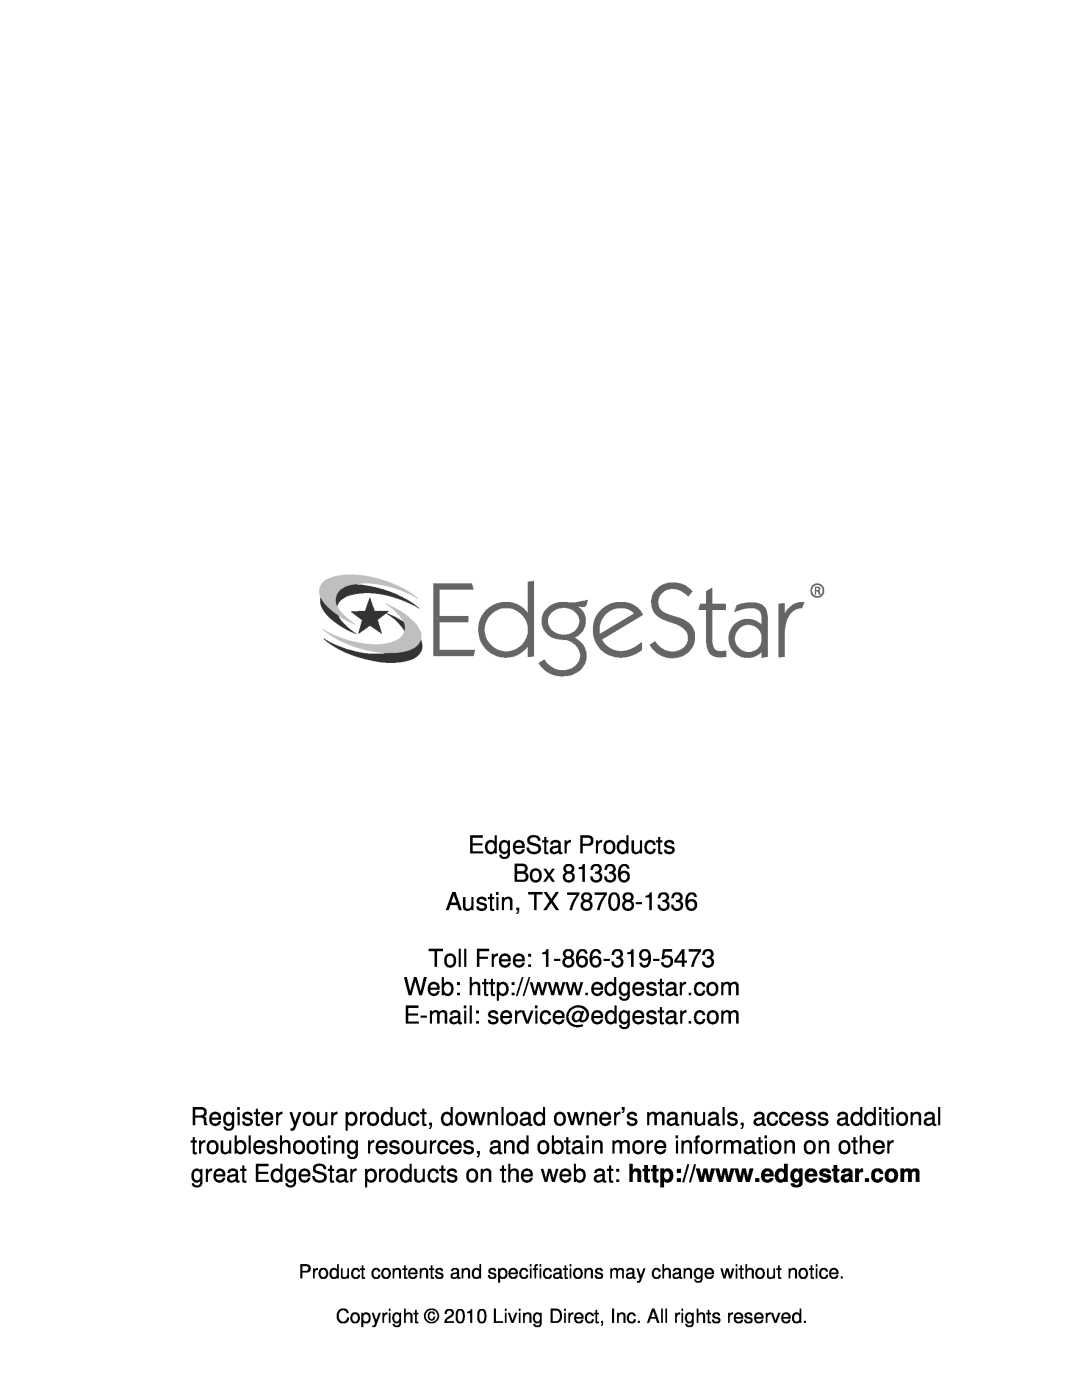 EdgeStar TBC50S owner manual EdgeStar Products Box Austin, TX Toll Free, E-mail service@edgestar.com 